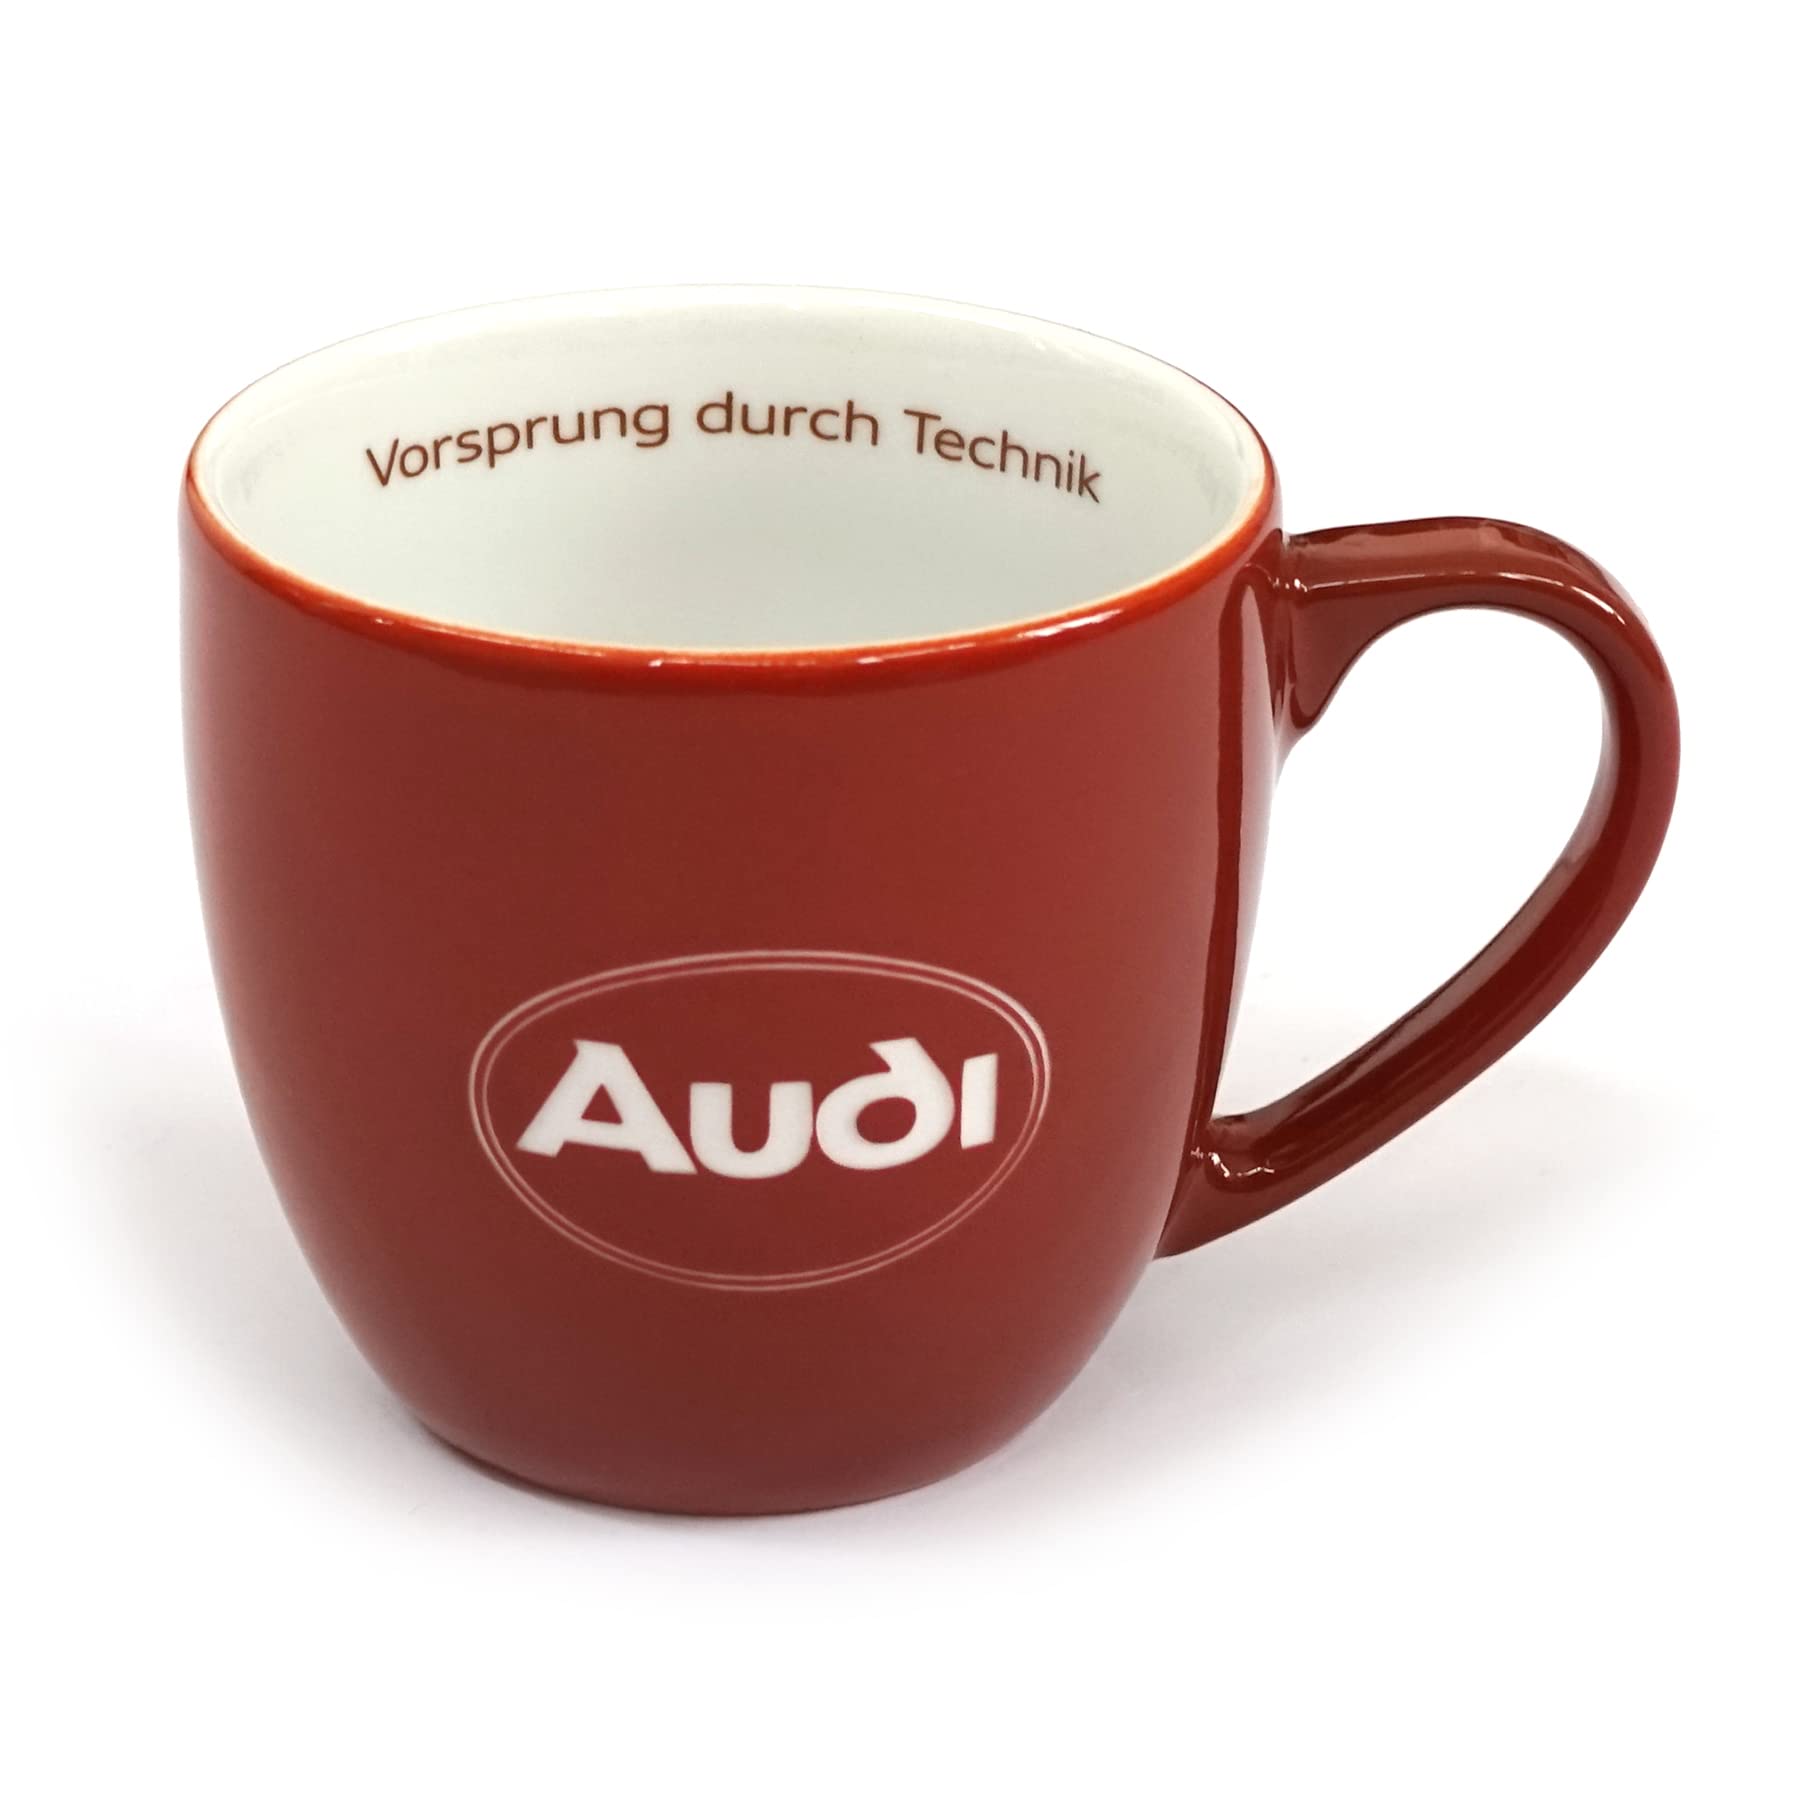 Audi A8-8053 Tasse Porzellan Becher Kaffeebecher Kaffeetasse, mit Schriftzug Vorsprung durch Technik, Oval Logo, rot von Audi